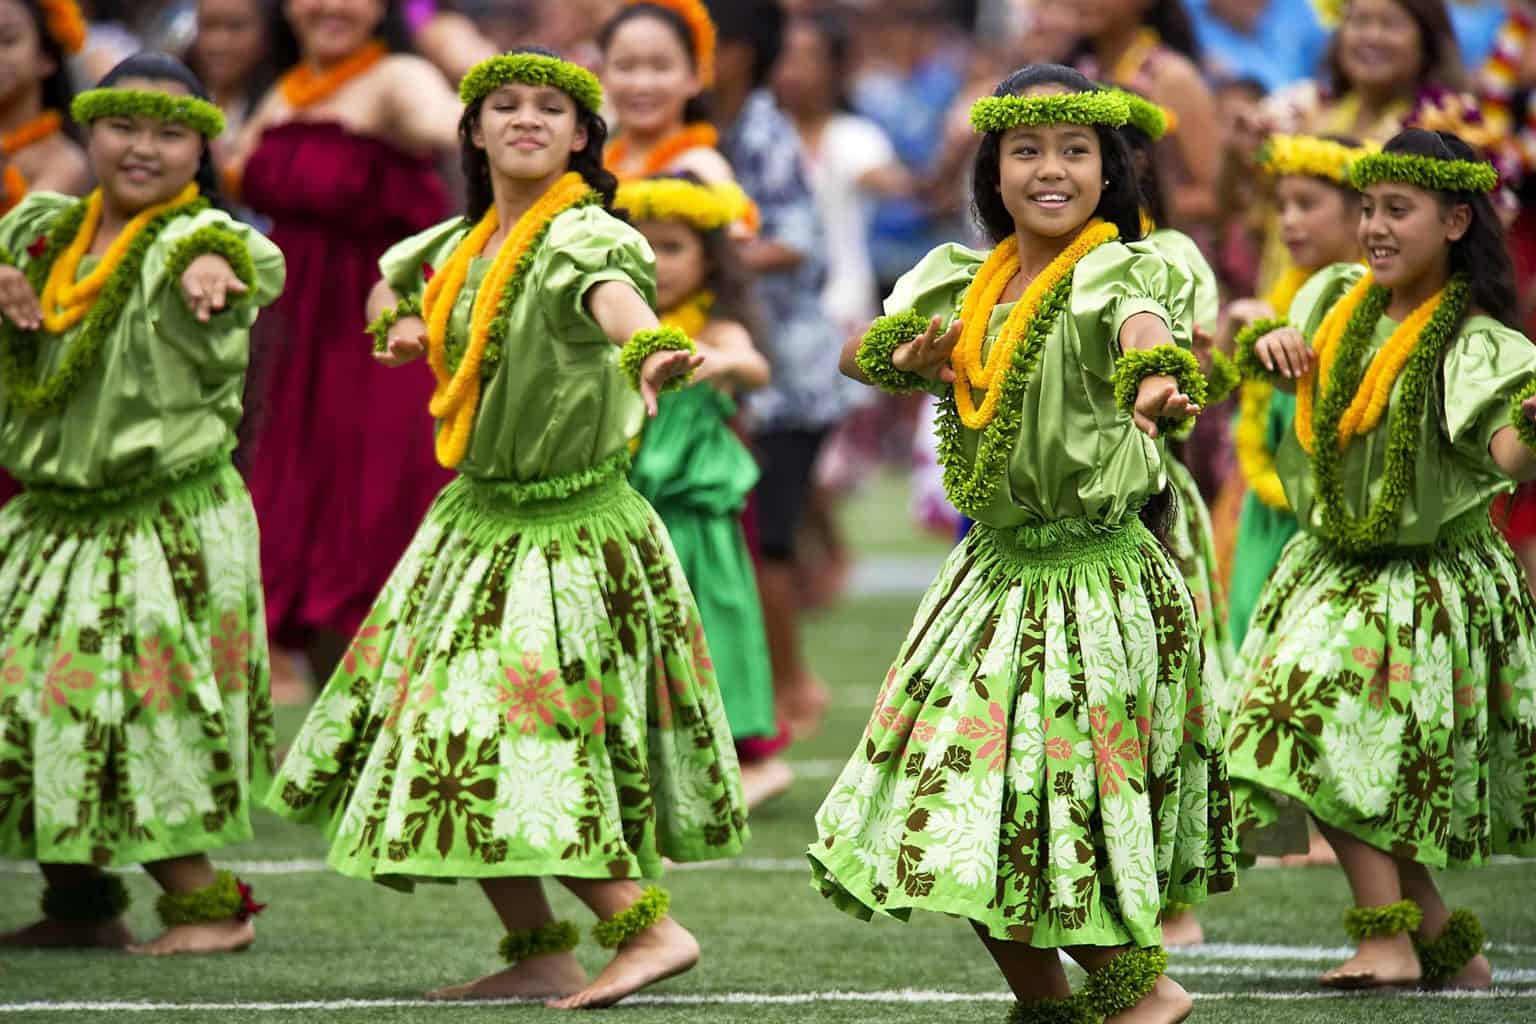 Girls in Green Dress Dancing during Daytime